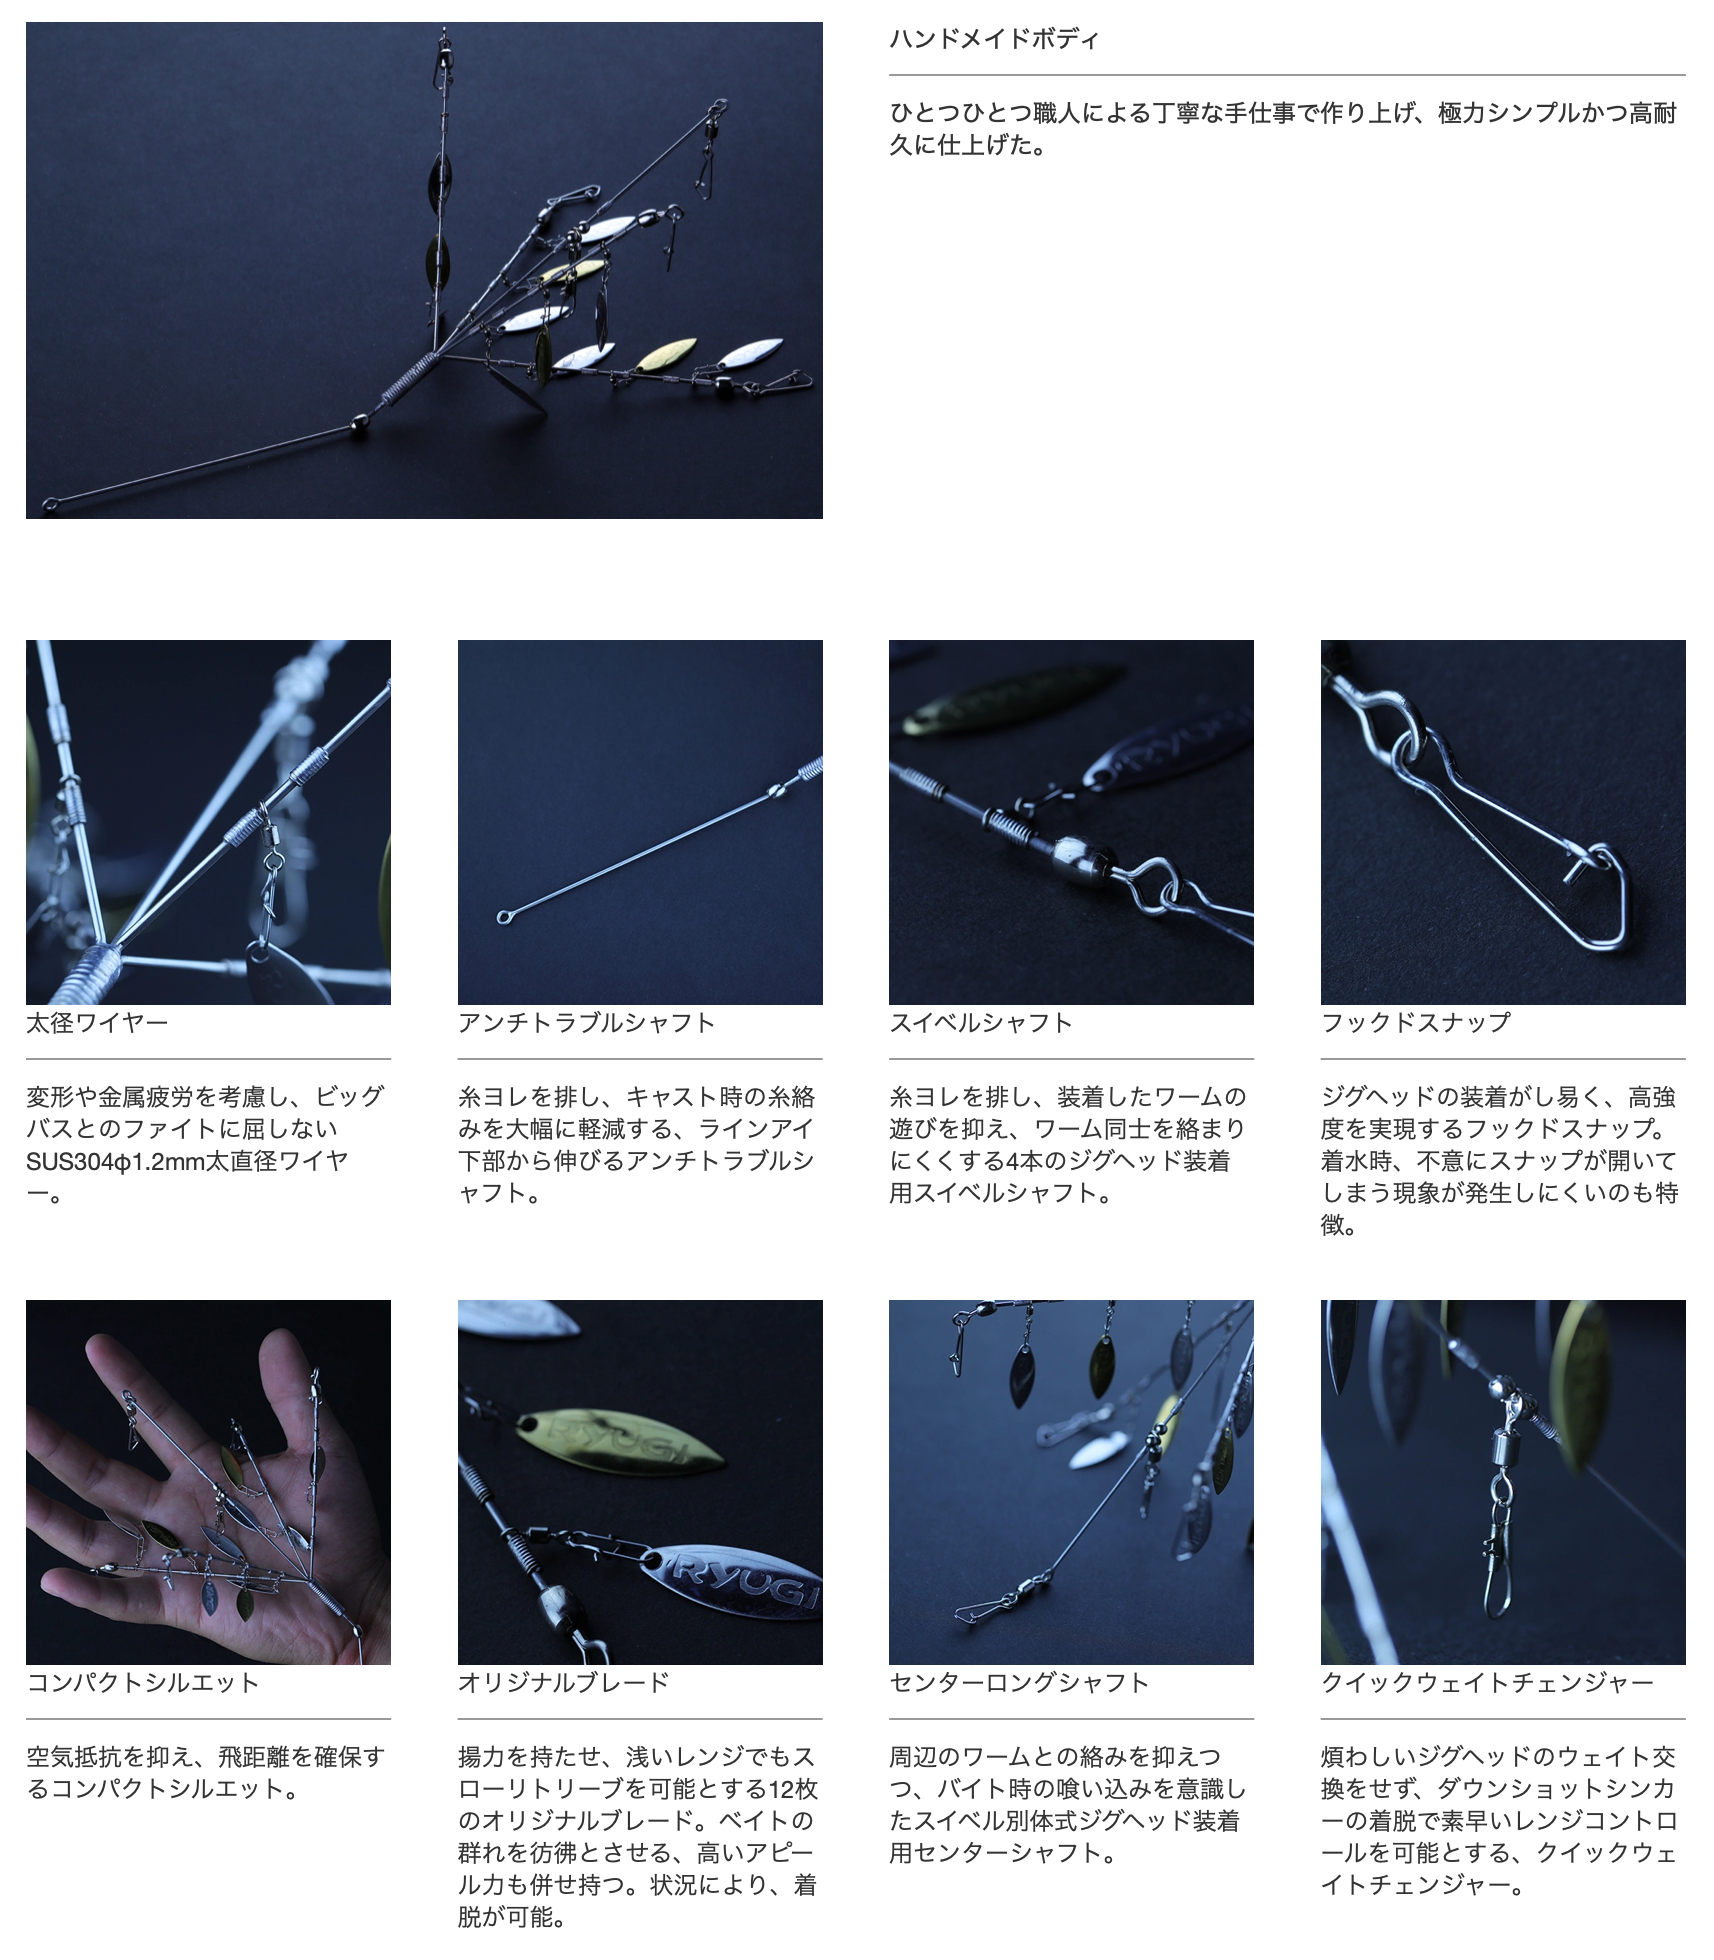 Ryugi R-Vanguard Umbrella Rig